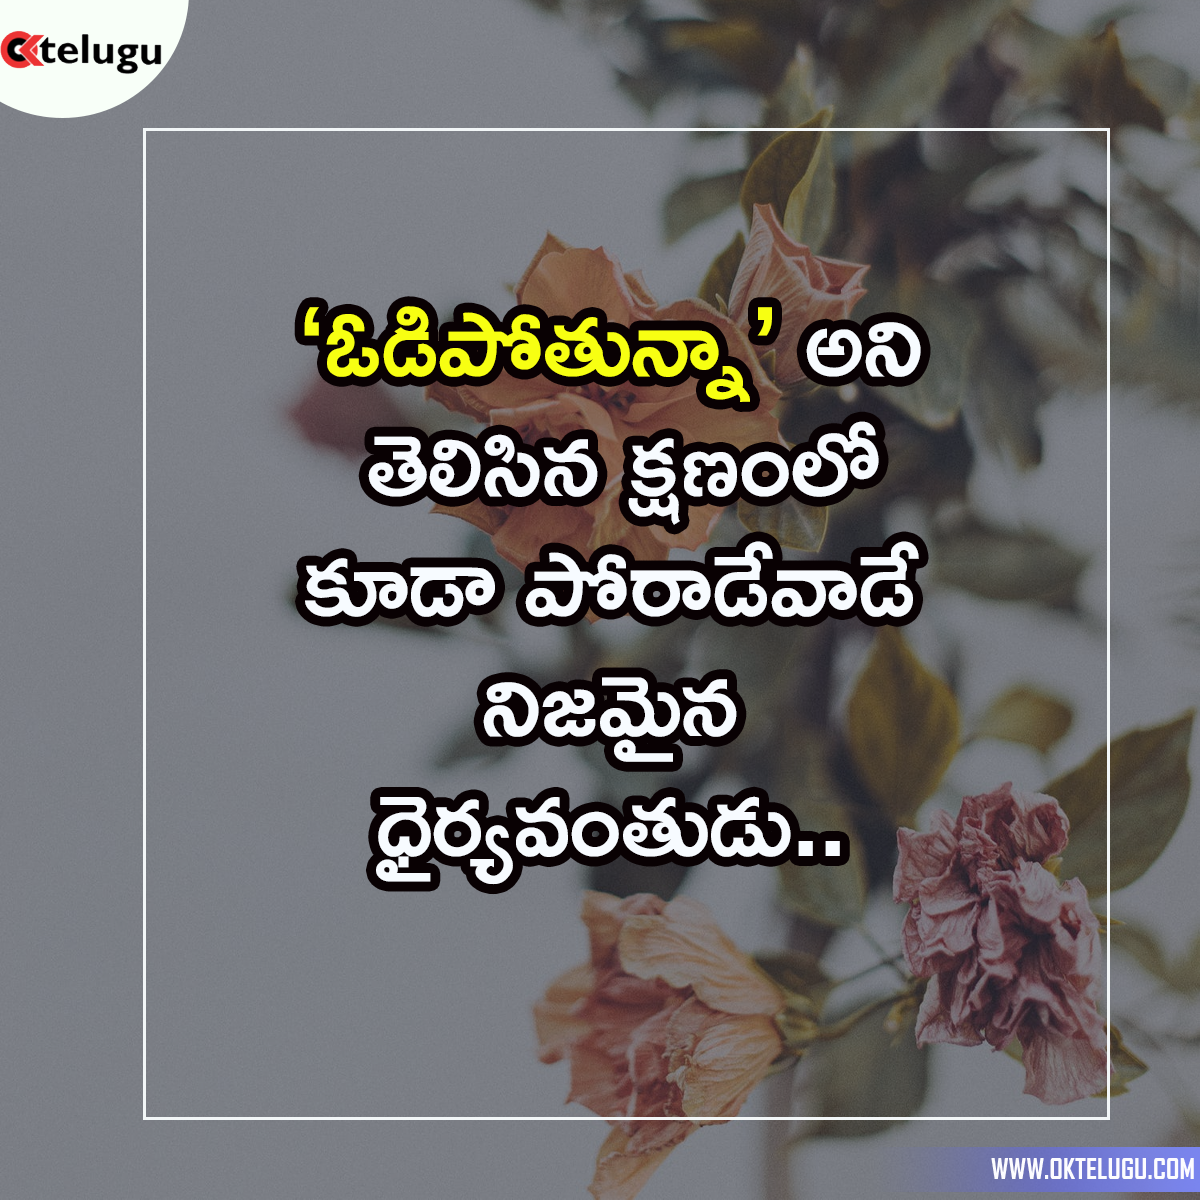 Telugu Quotes and Quotations